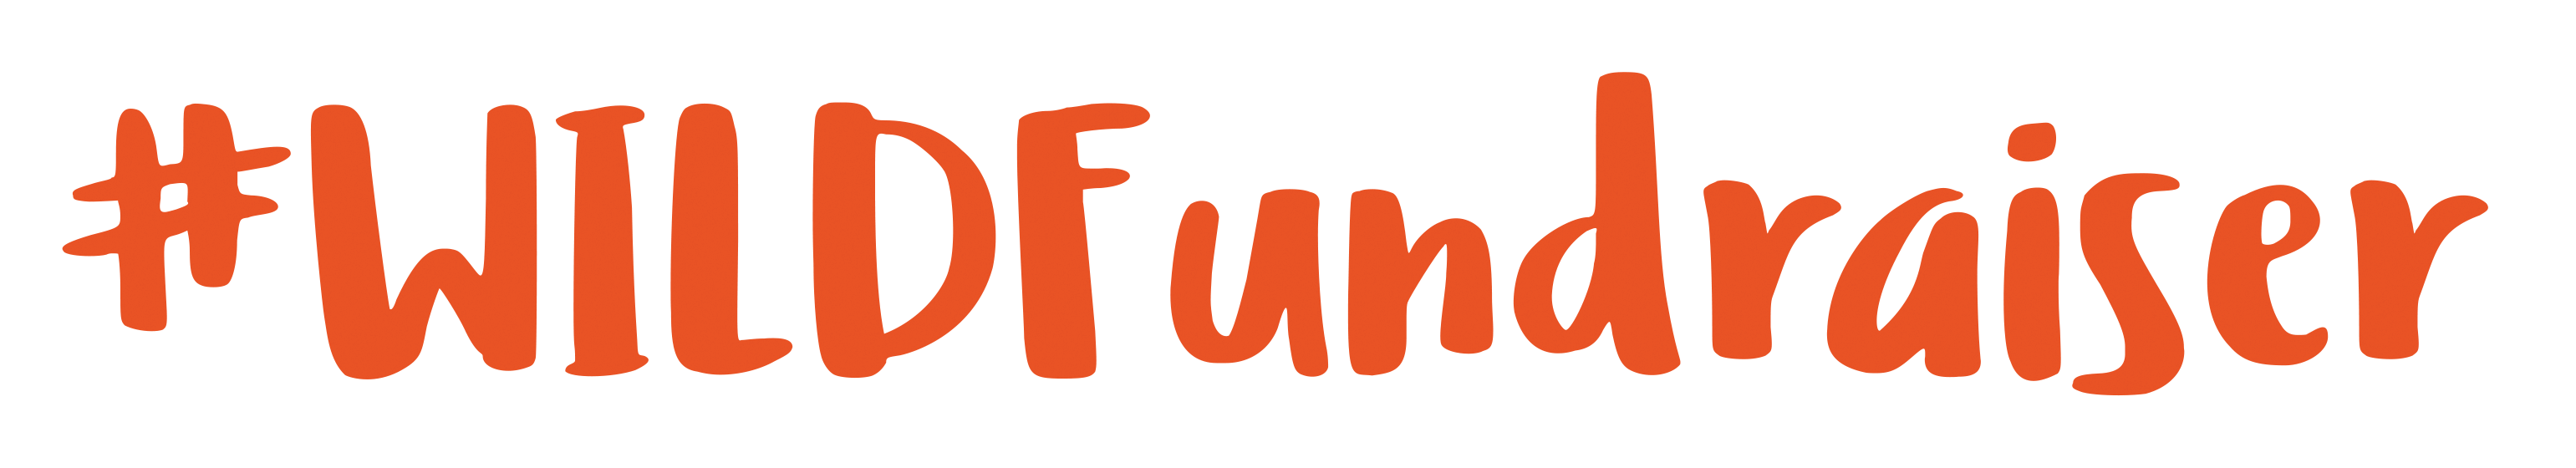 Hashtag WILDFundraiser logo